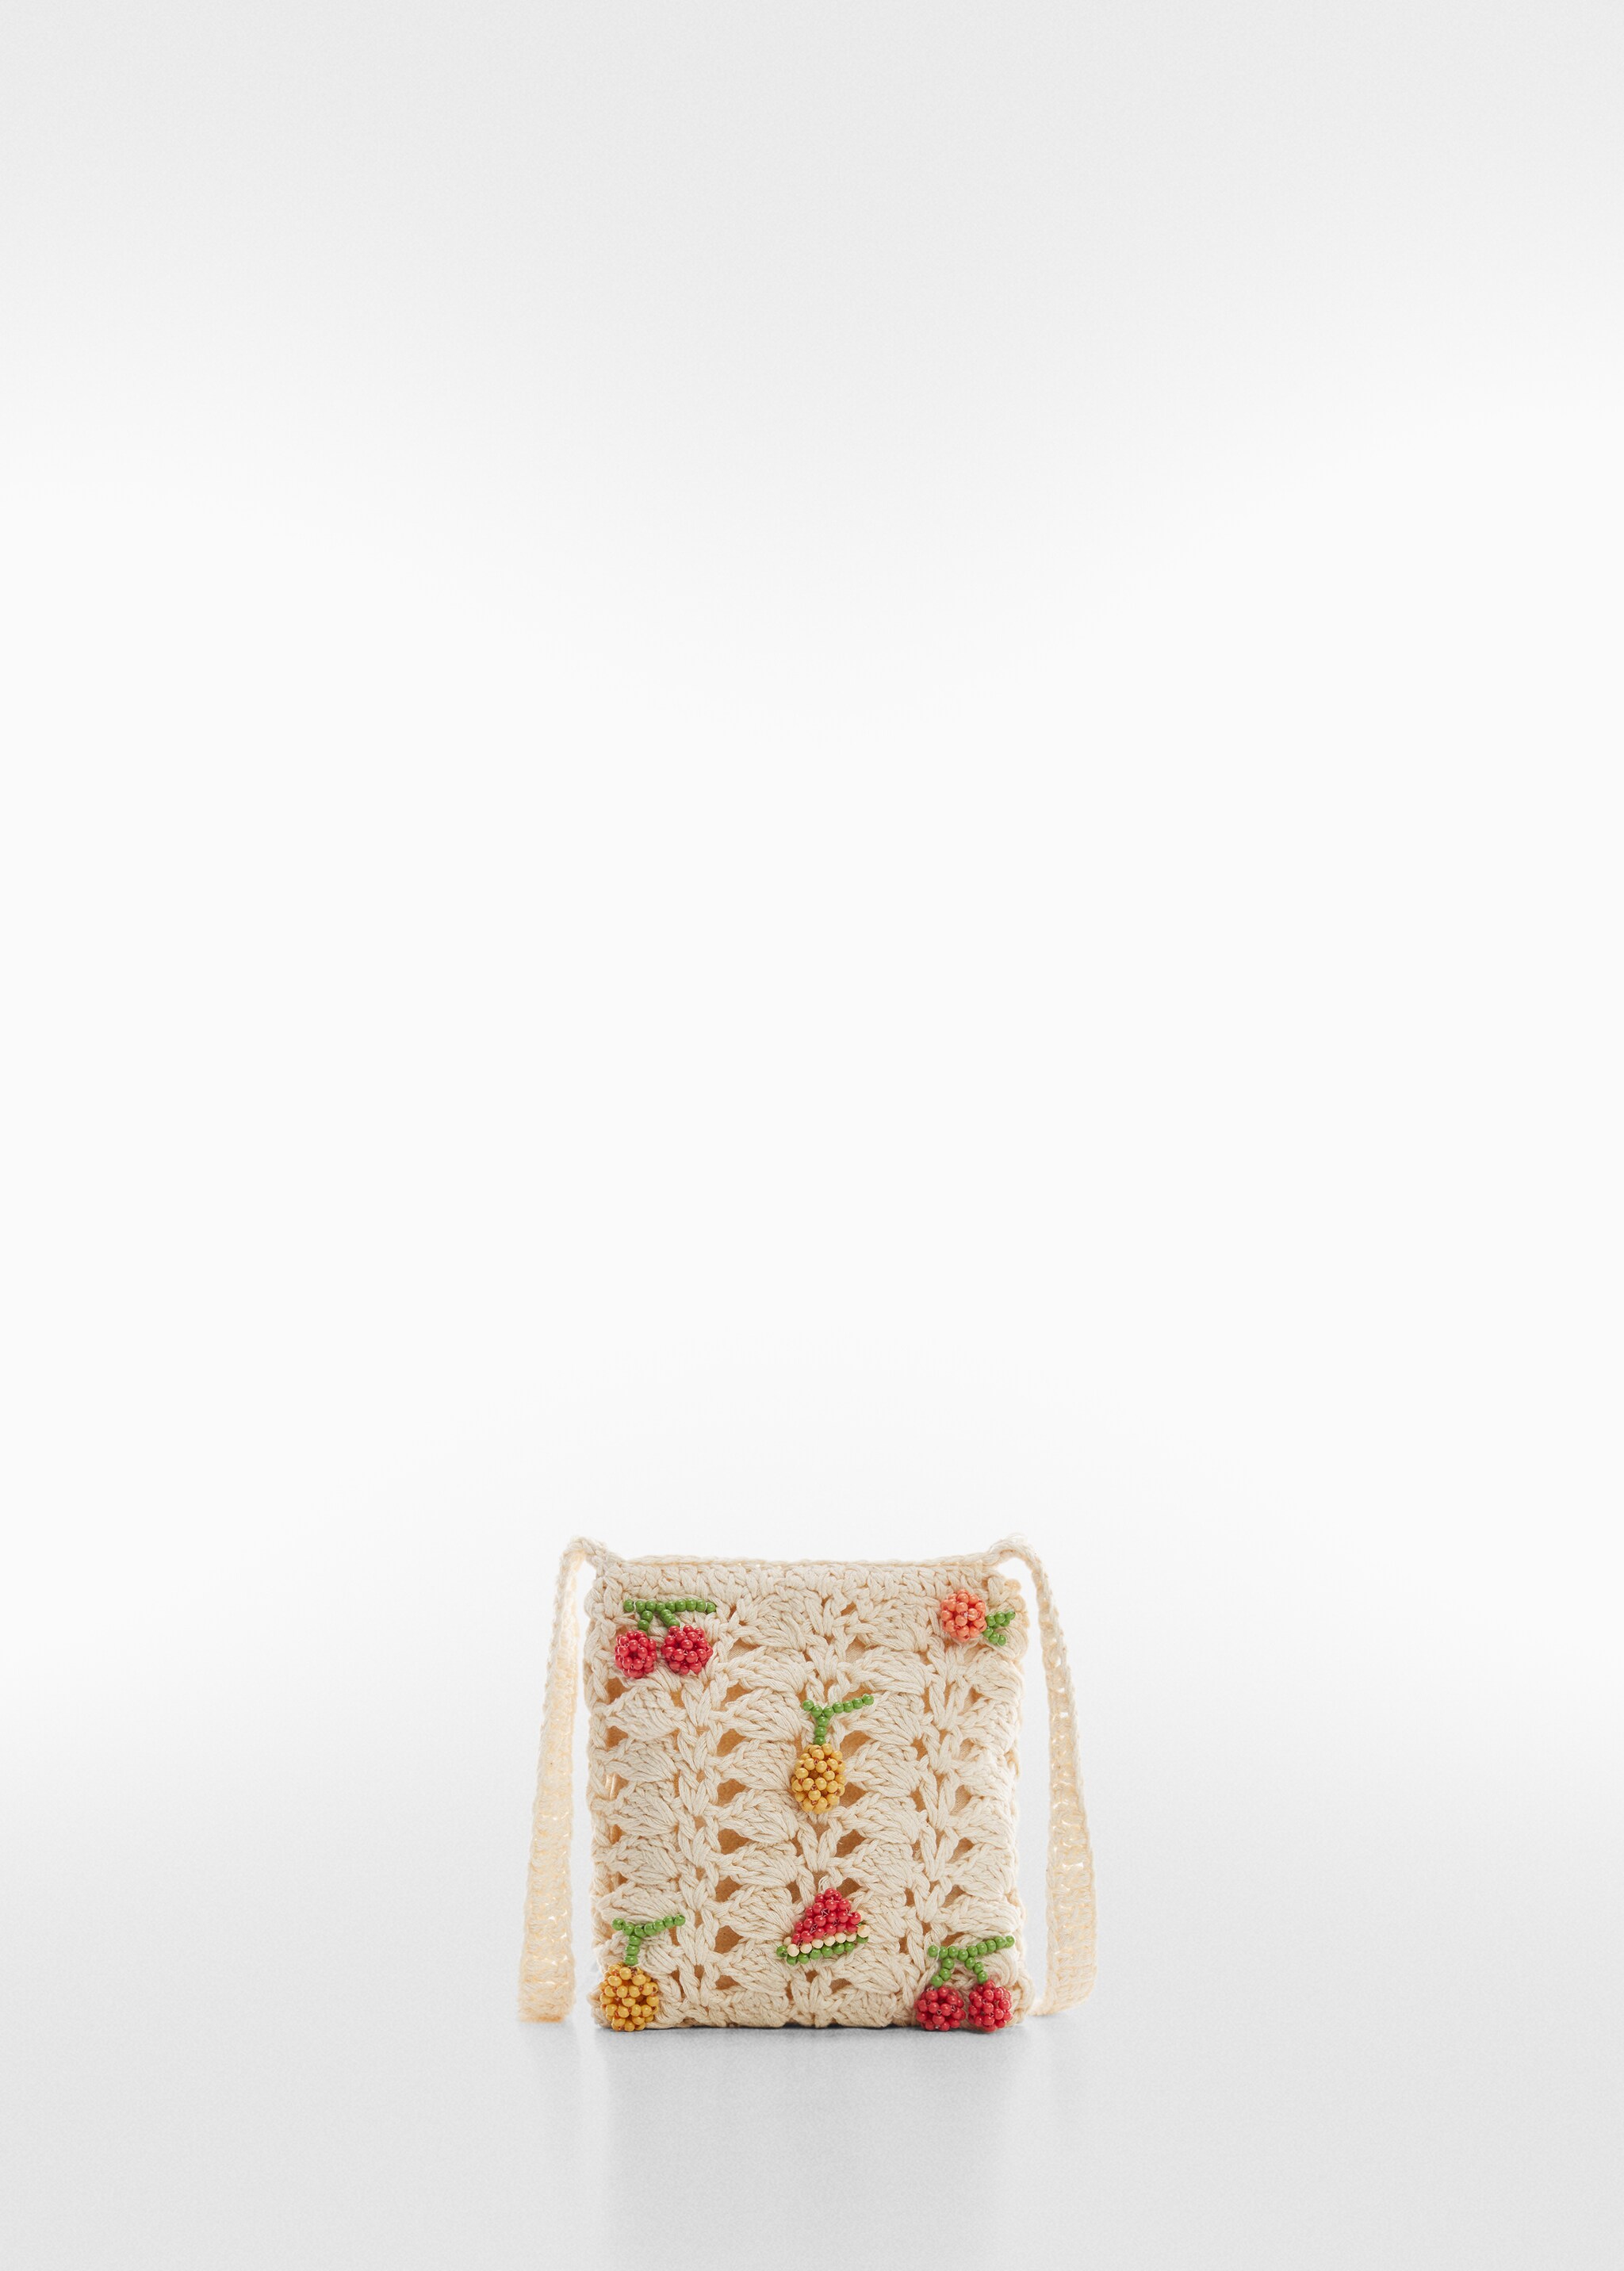 Crochet mini bag - Article without model